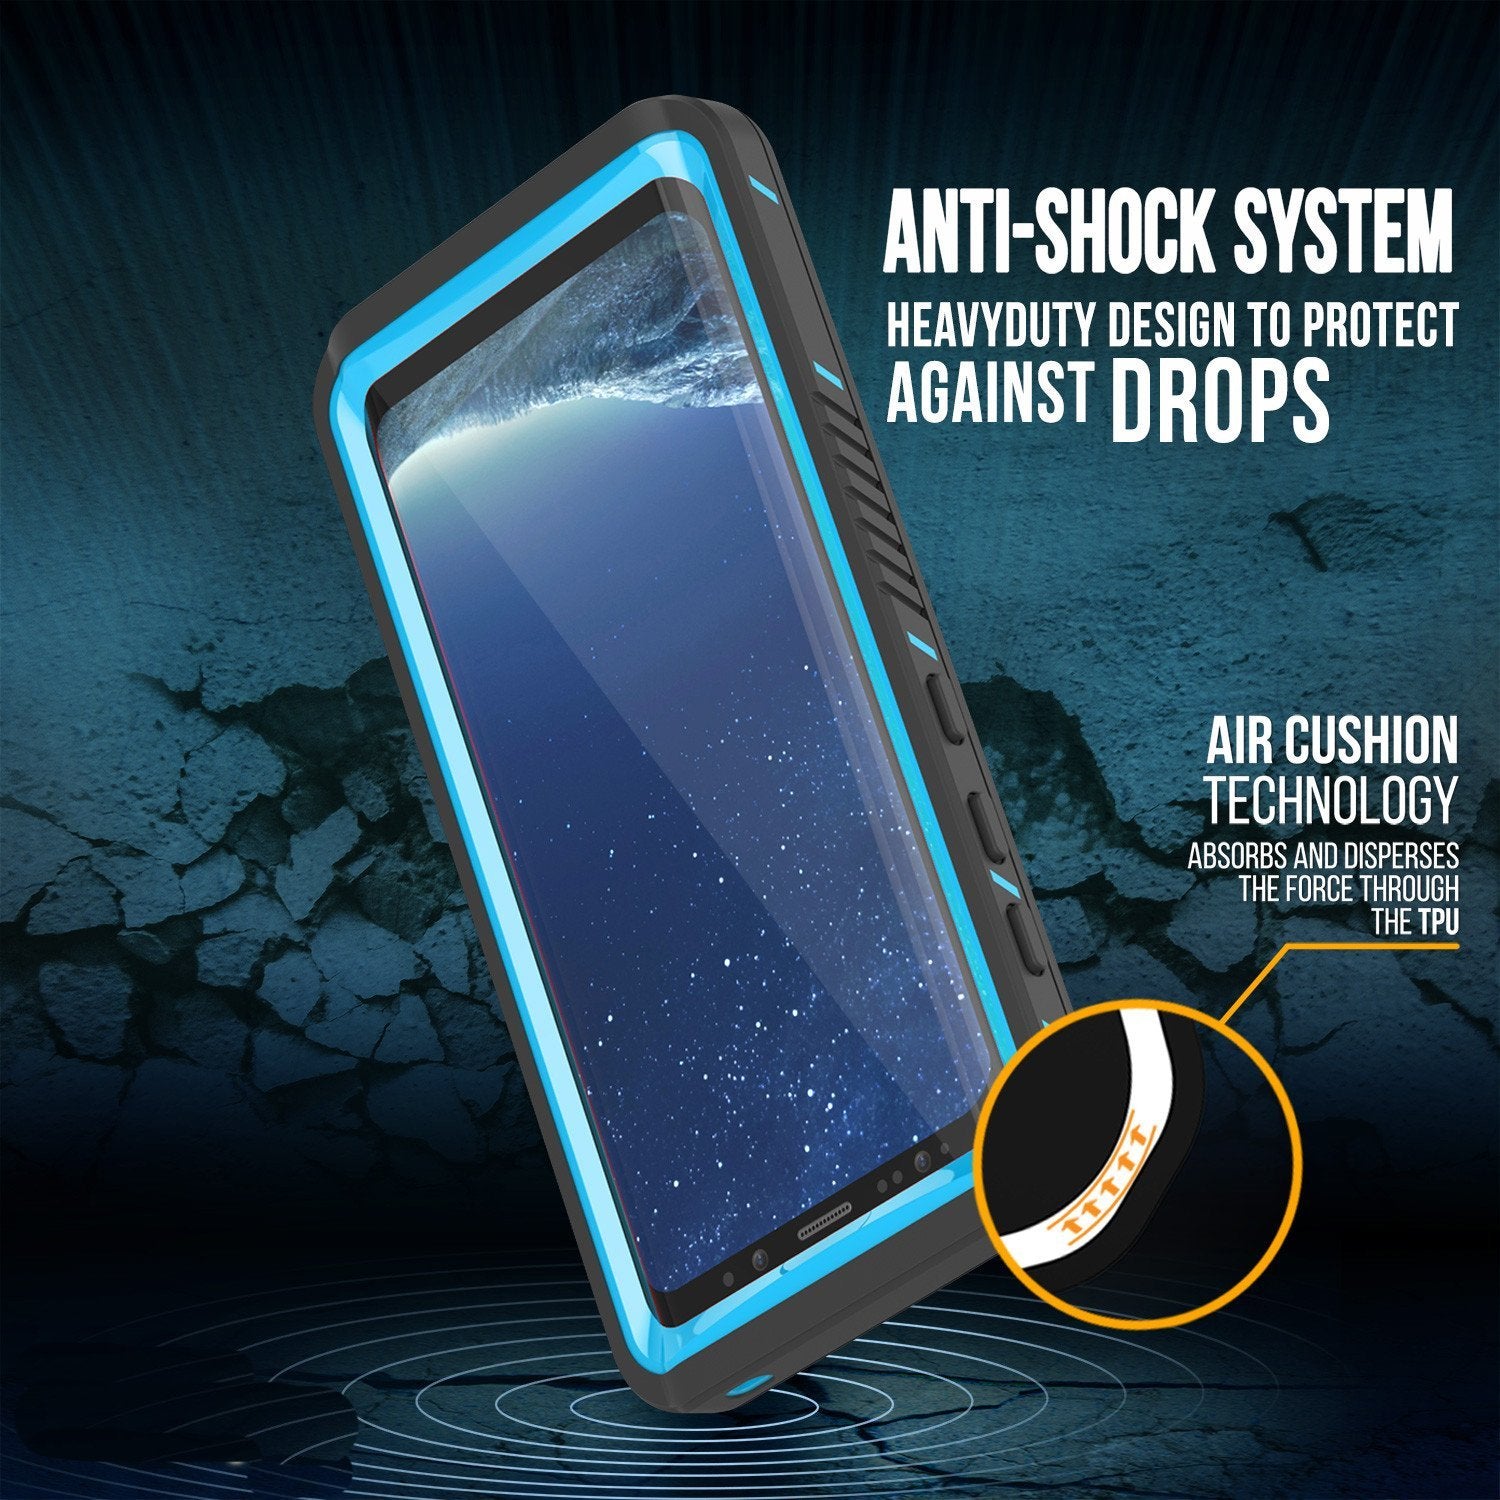 Galaxy S8 Waterproof Case, Punkcase [Extreme Series] [Slim Fit] [IP68 Certified] [Shockproof] [Snowproof] [Dirproof] Armor Cover [Light Blue]